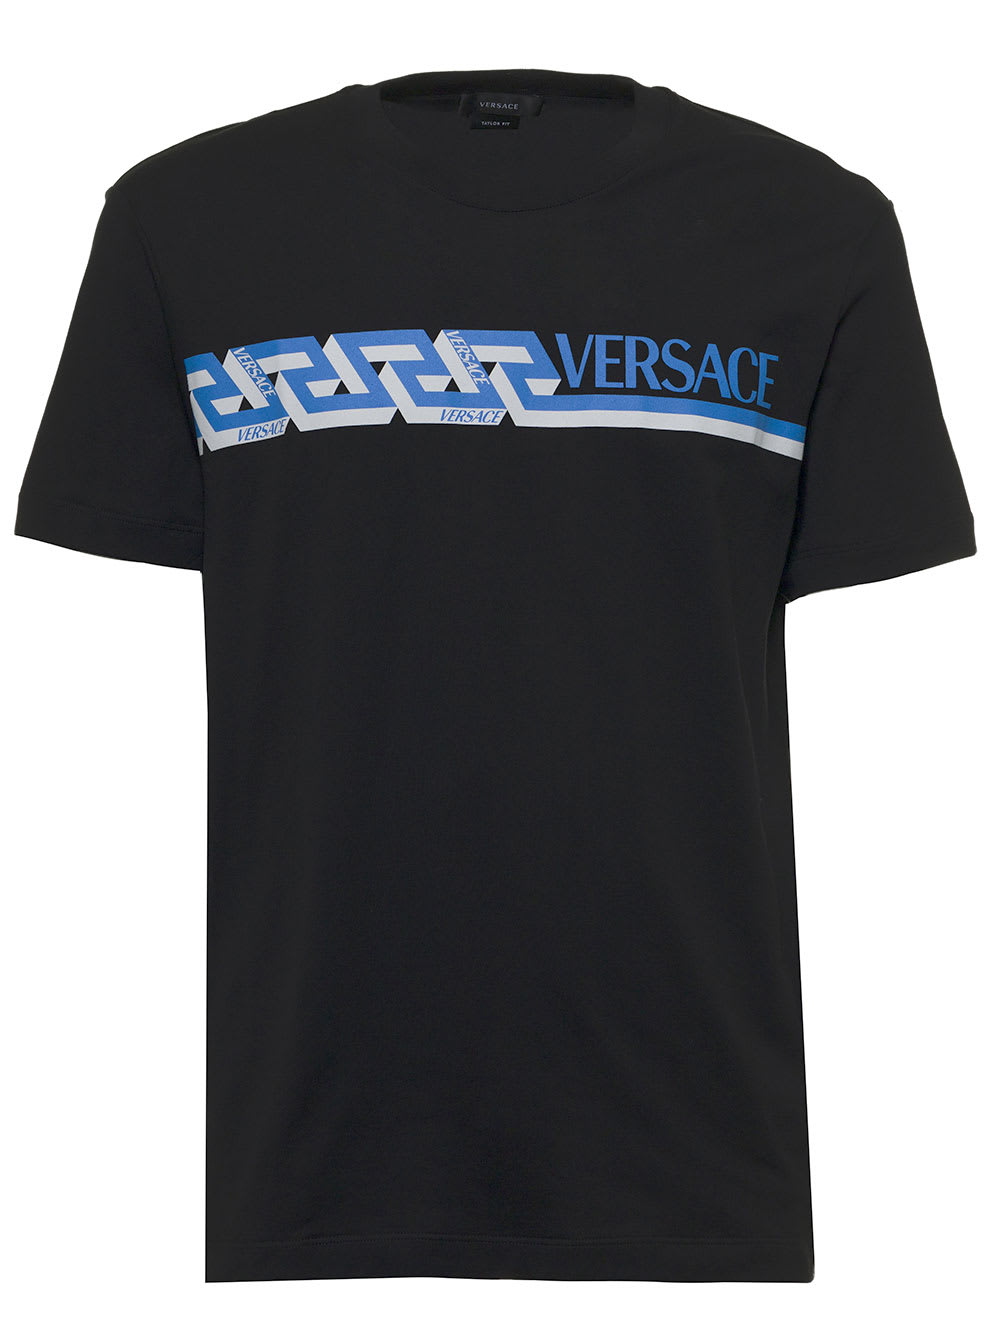 Versace Black Cotton T-shirt With Signature Greek Print